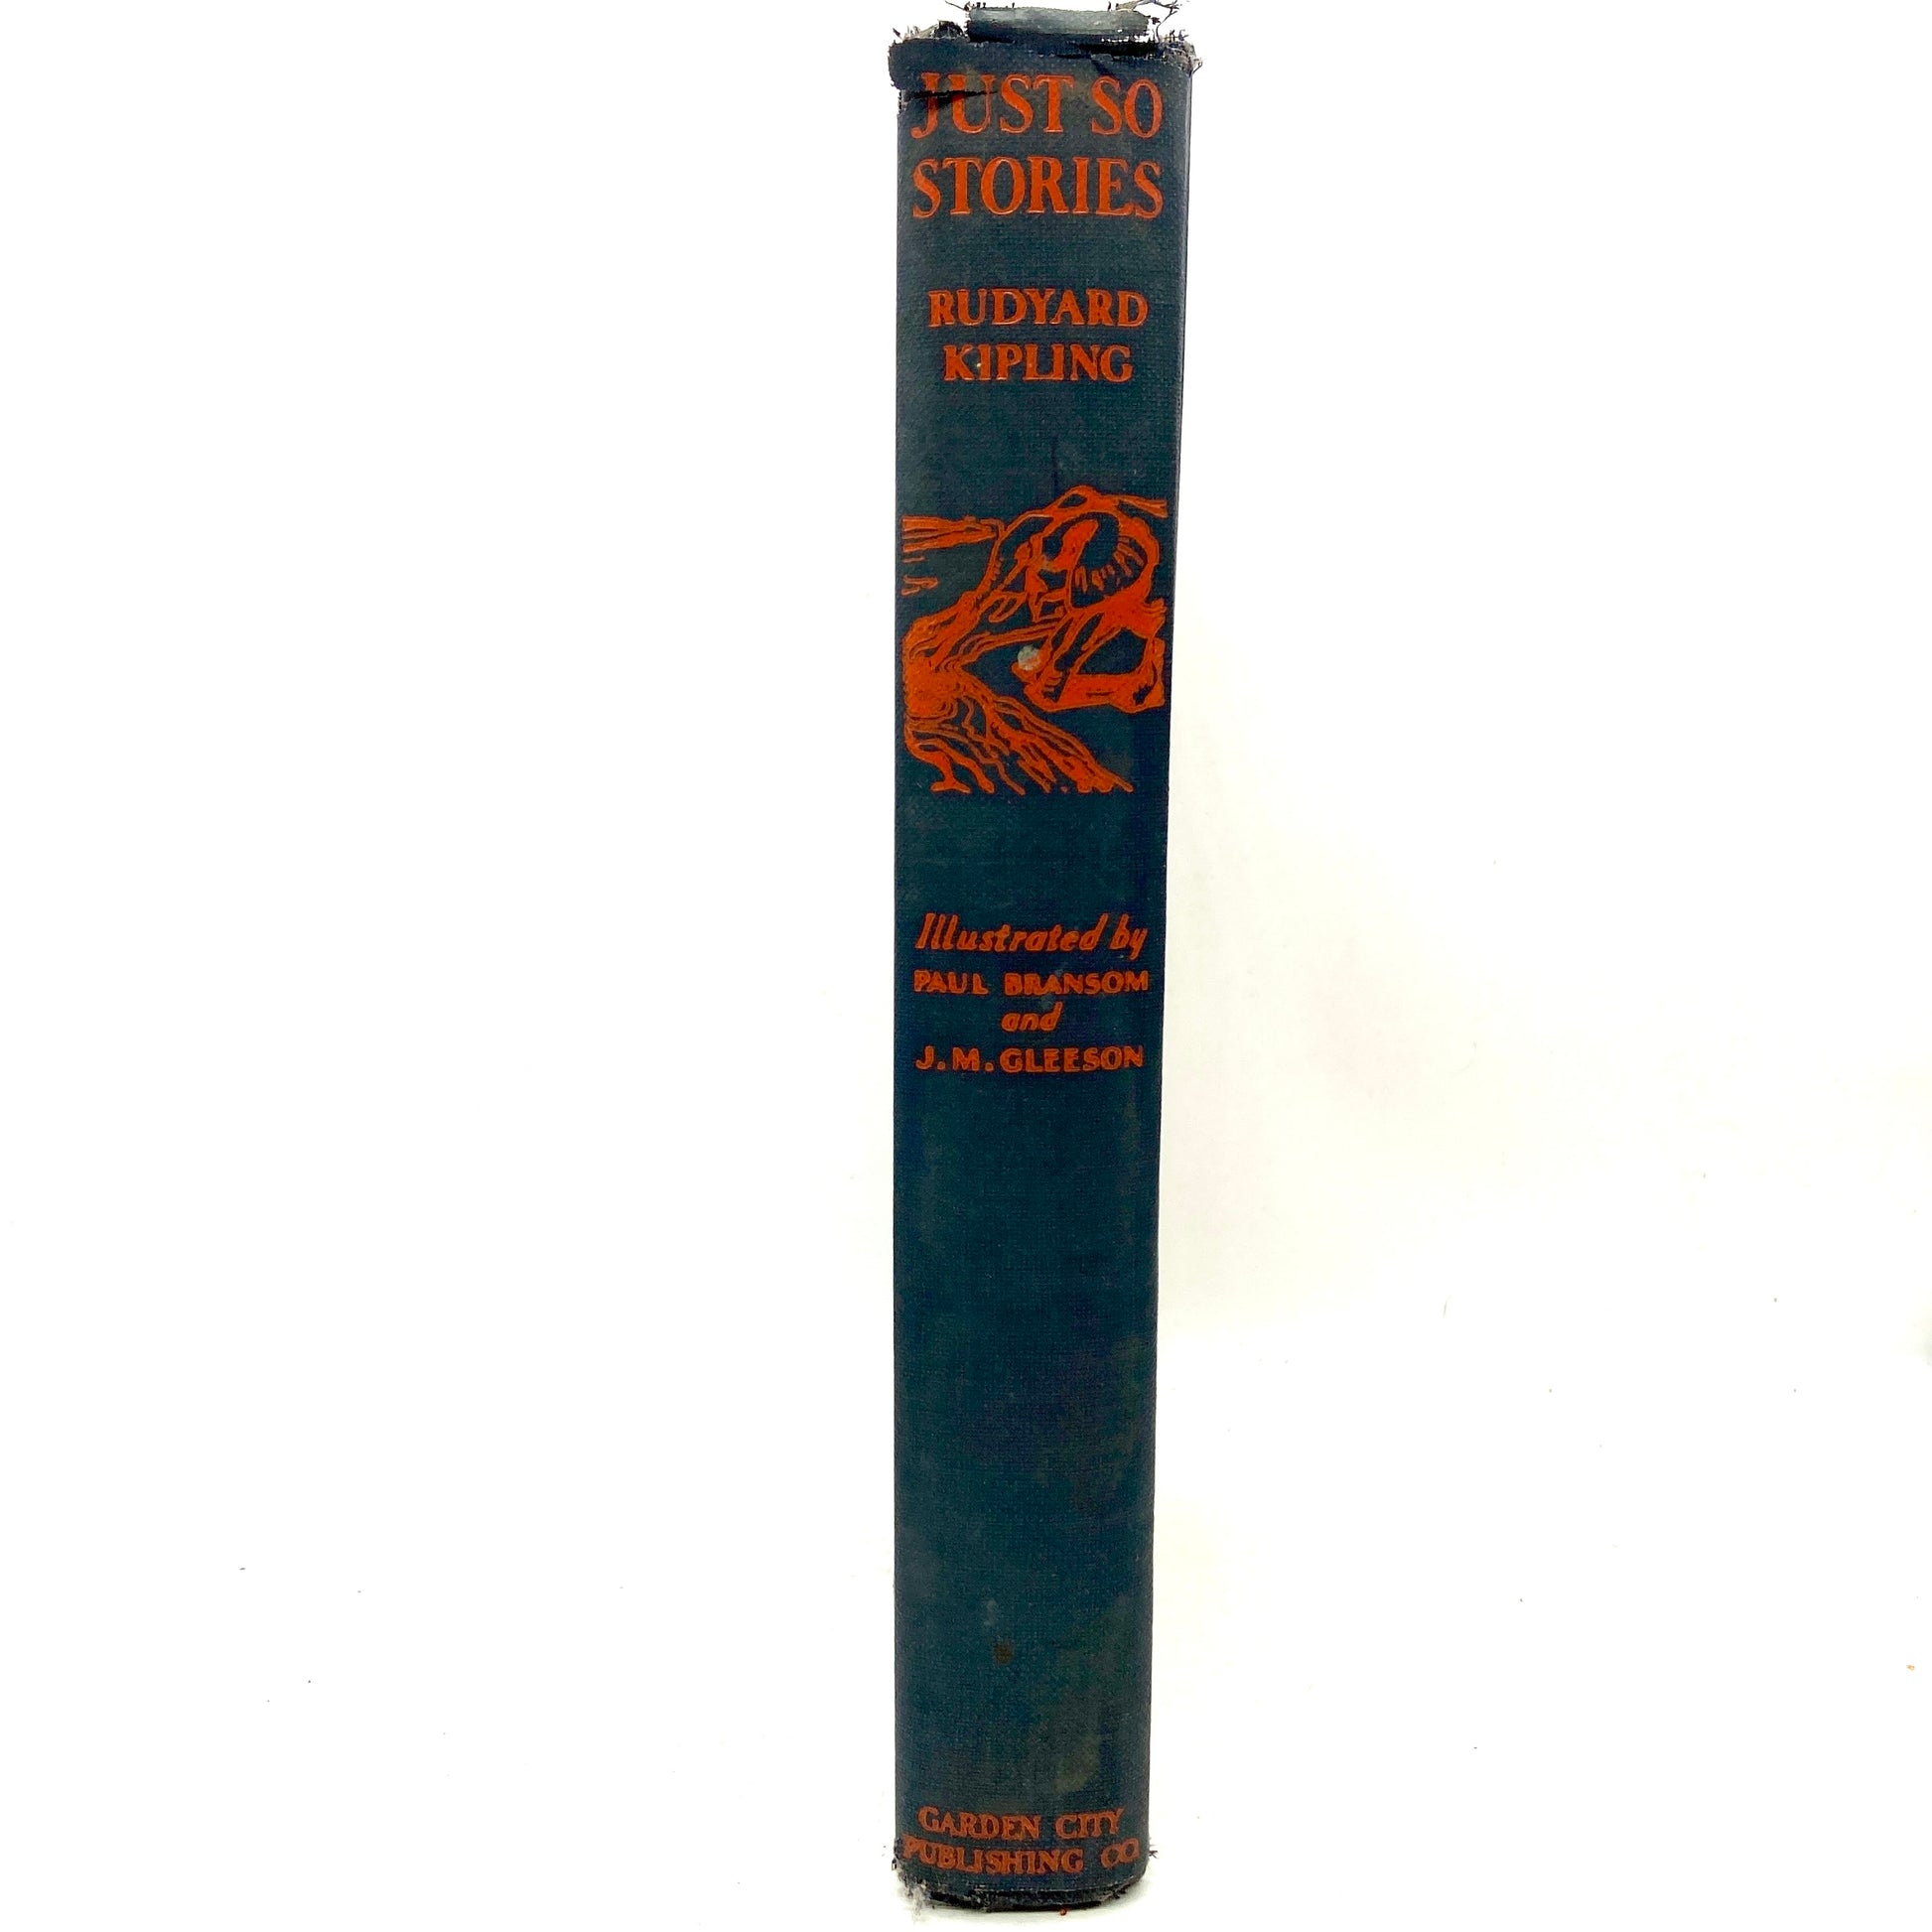 KIPLING, Rudyard "Just So Stories" [Garden City Publishing, c1930] - Buzz Bookstore